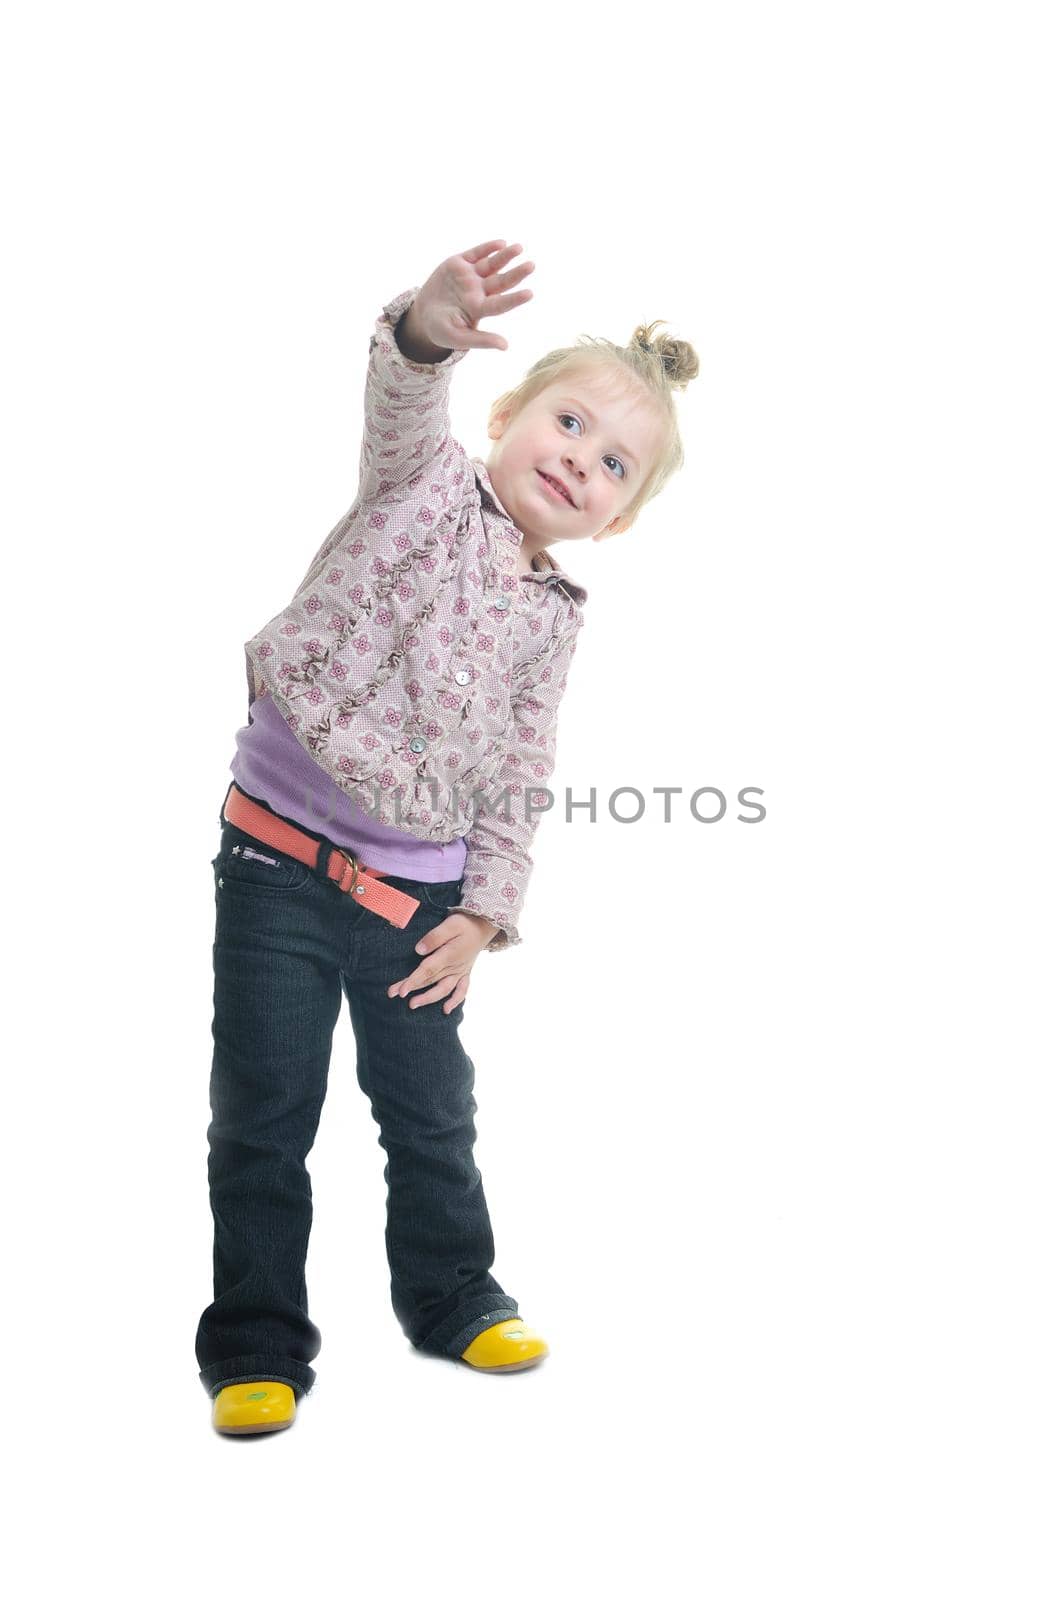 one happy   child isolated on white background